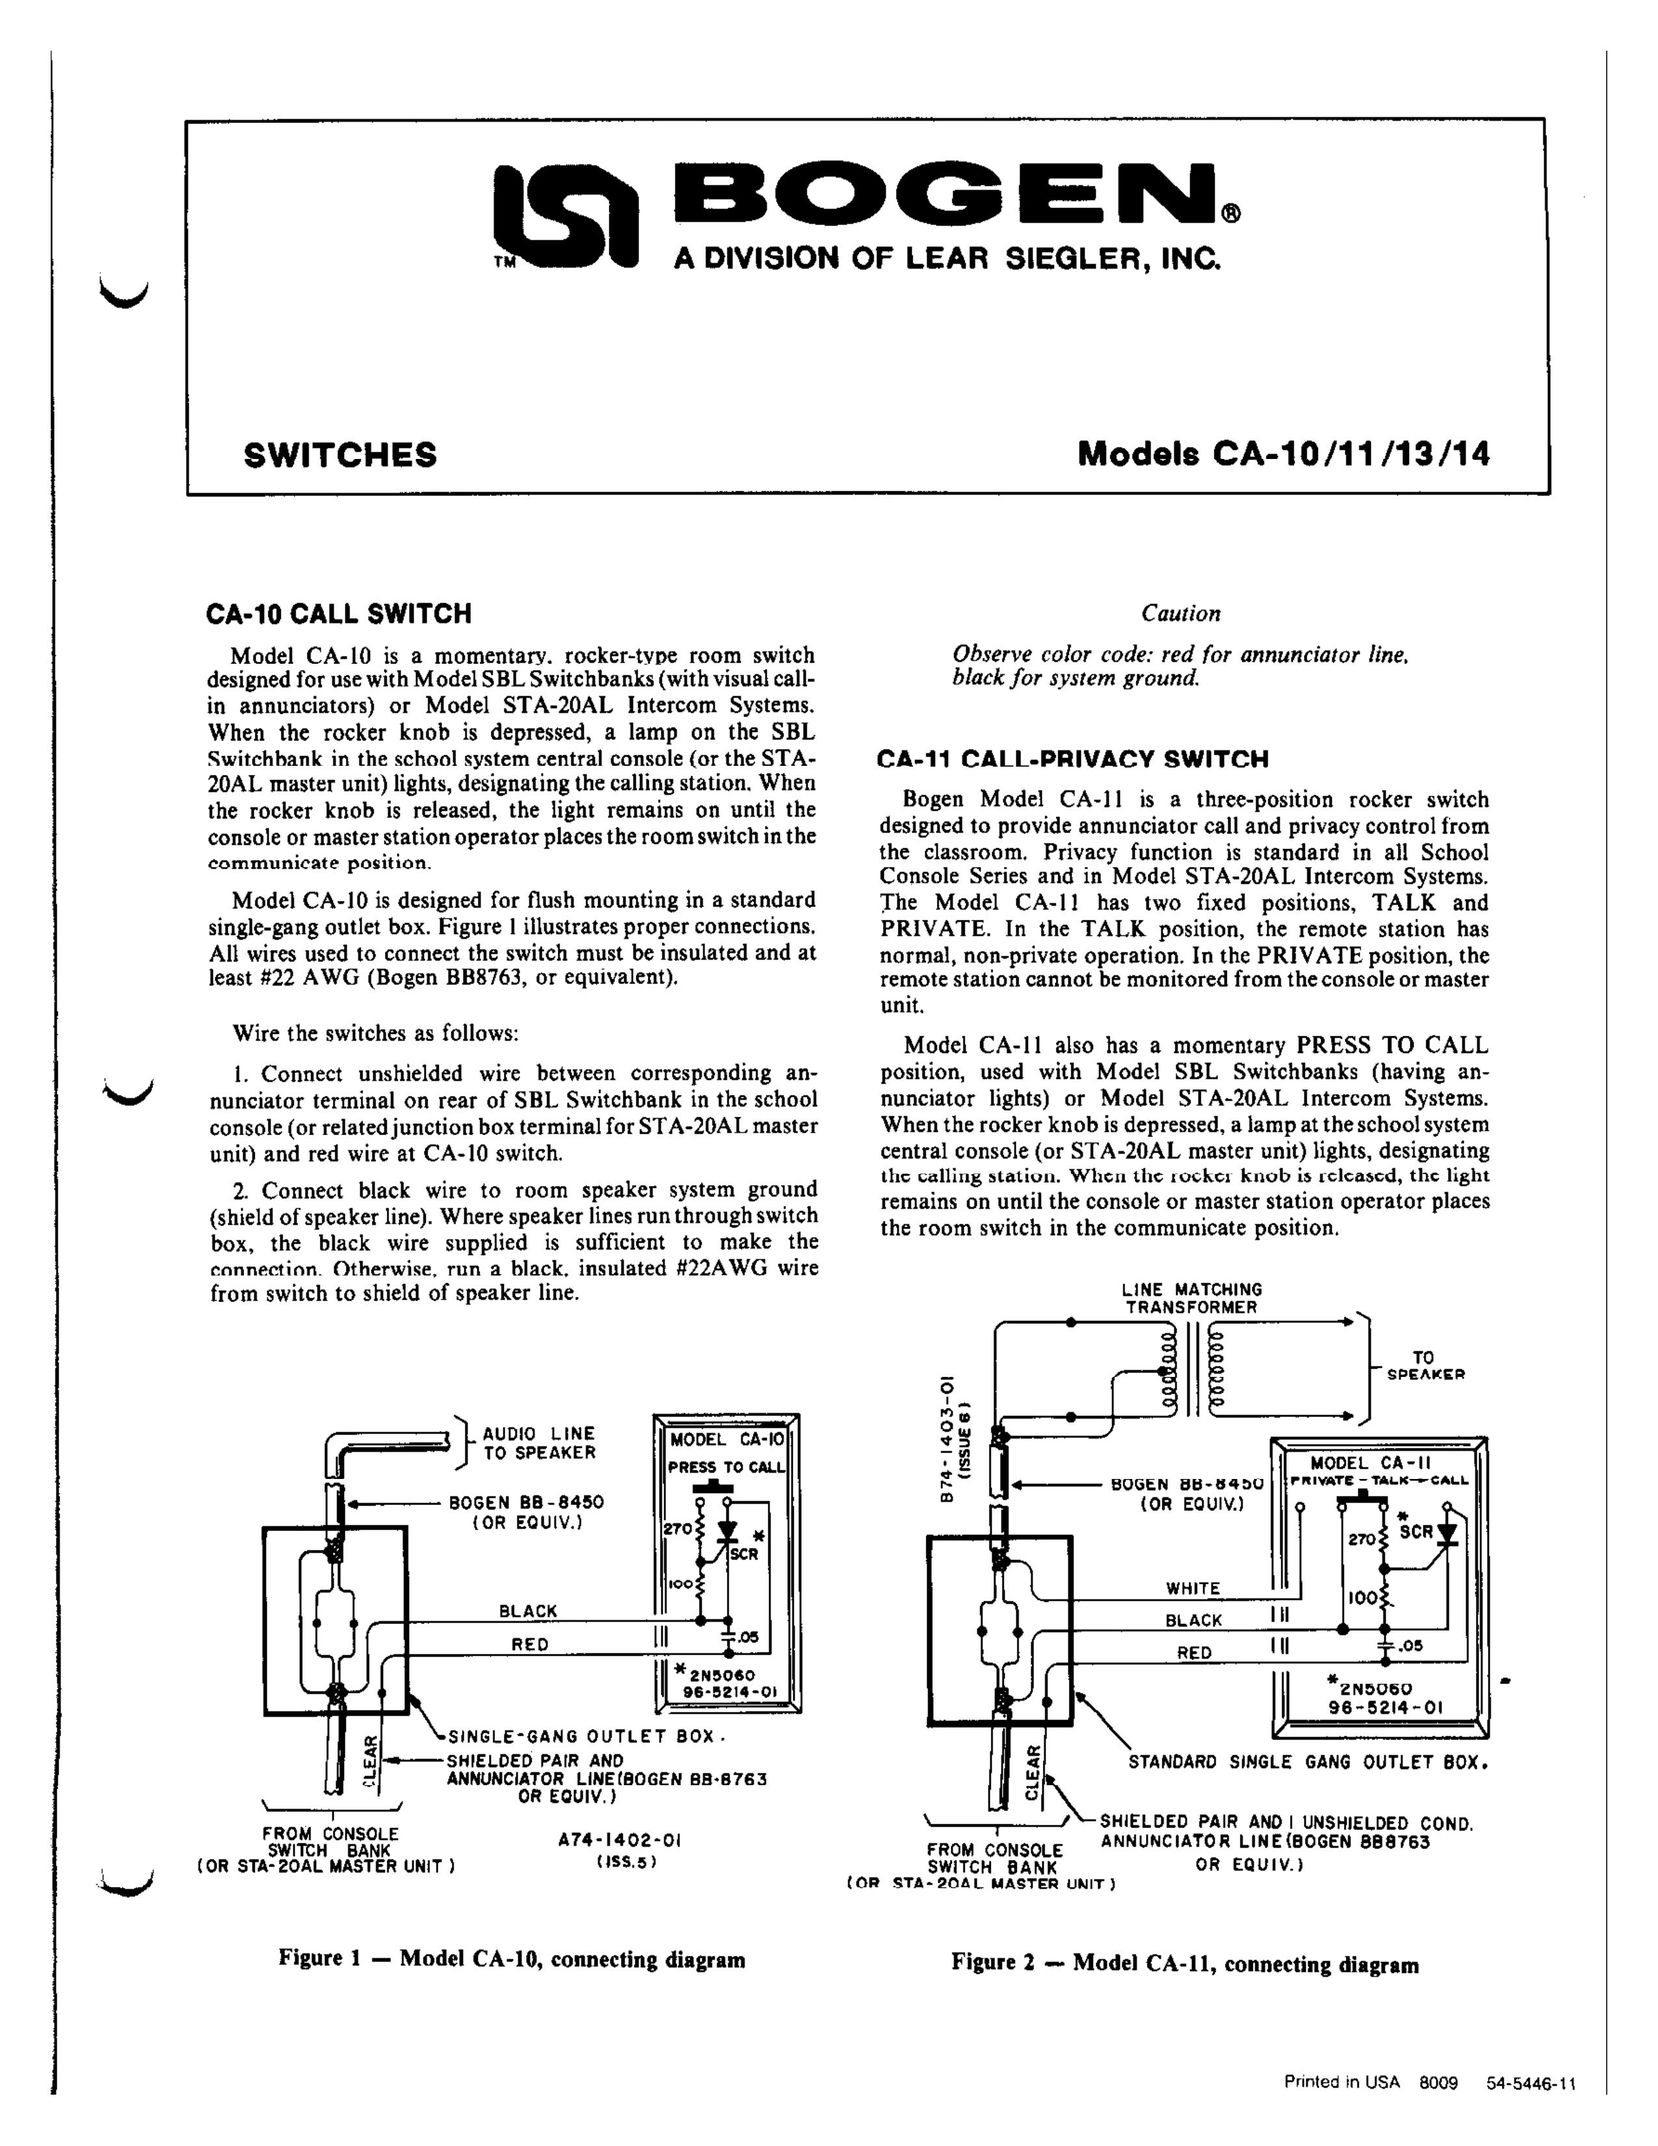 Bogen CA-10 Switch User Manual